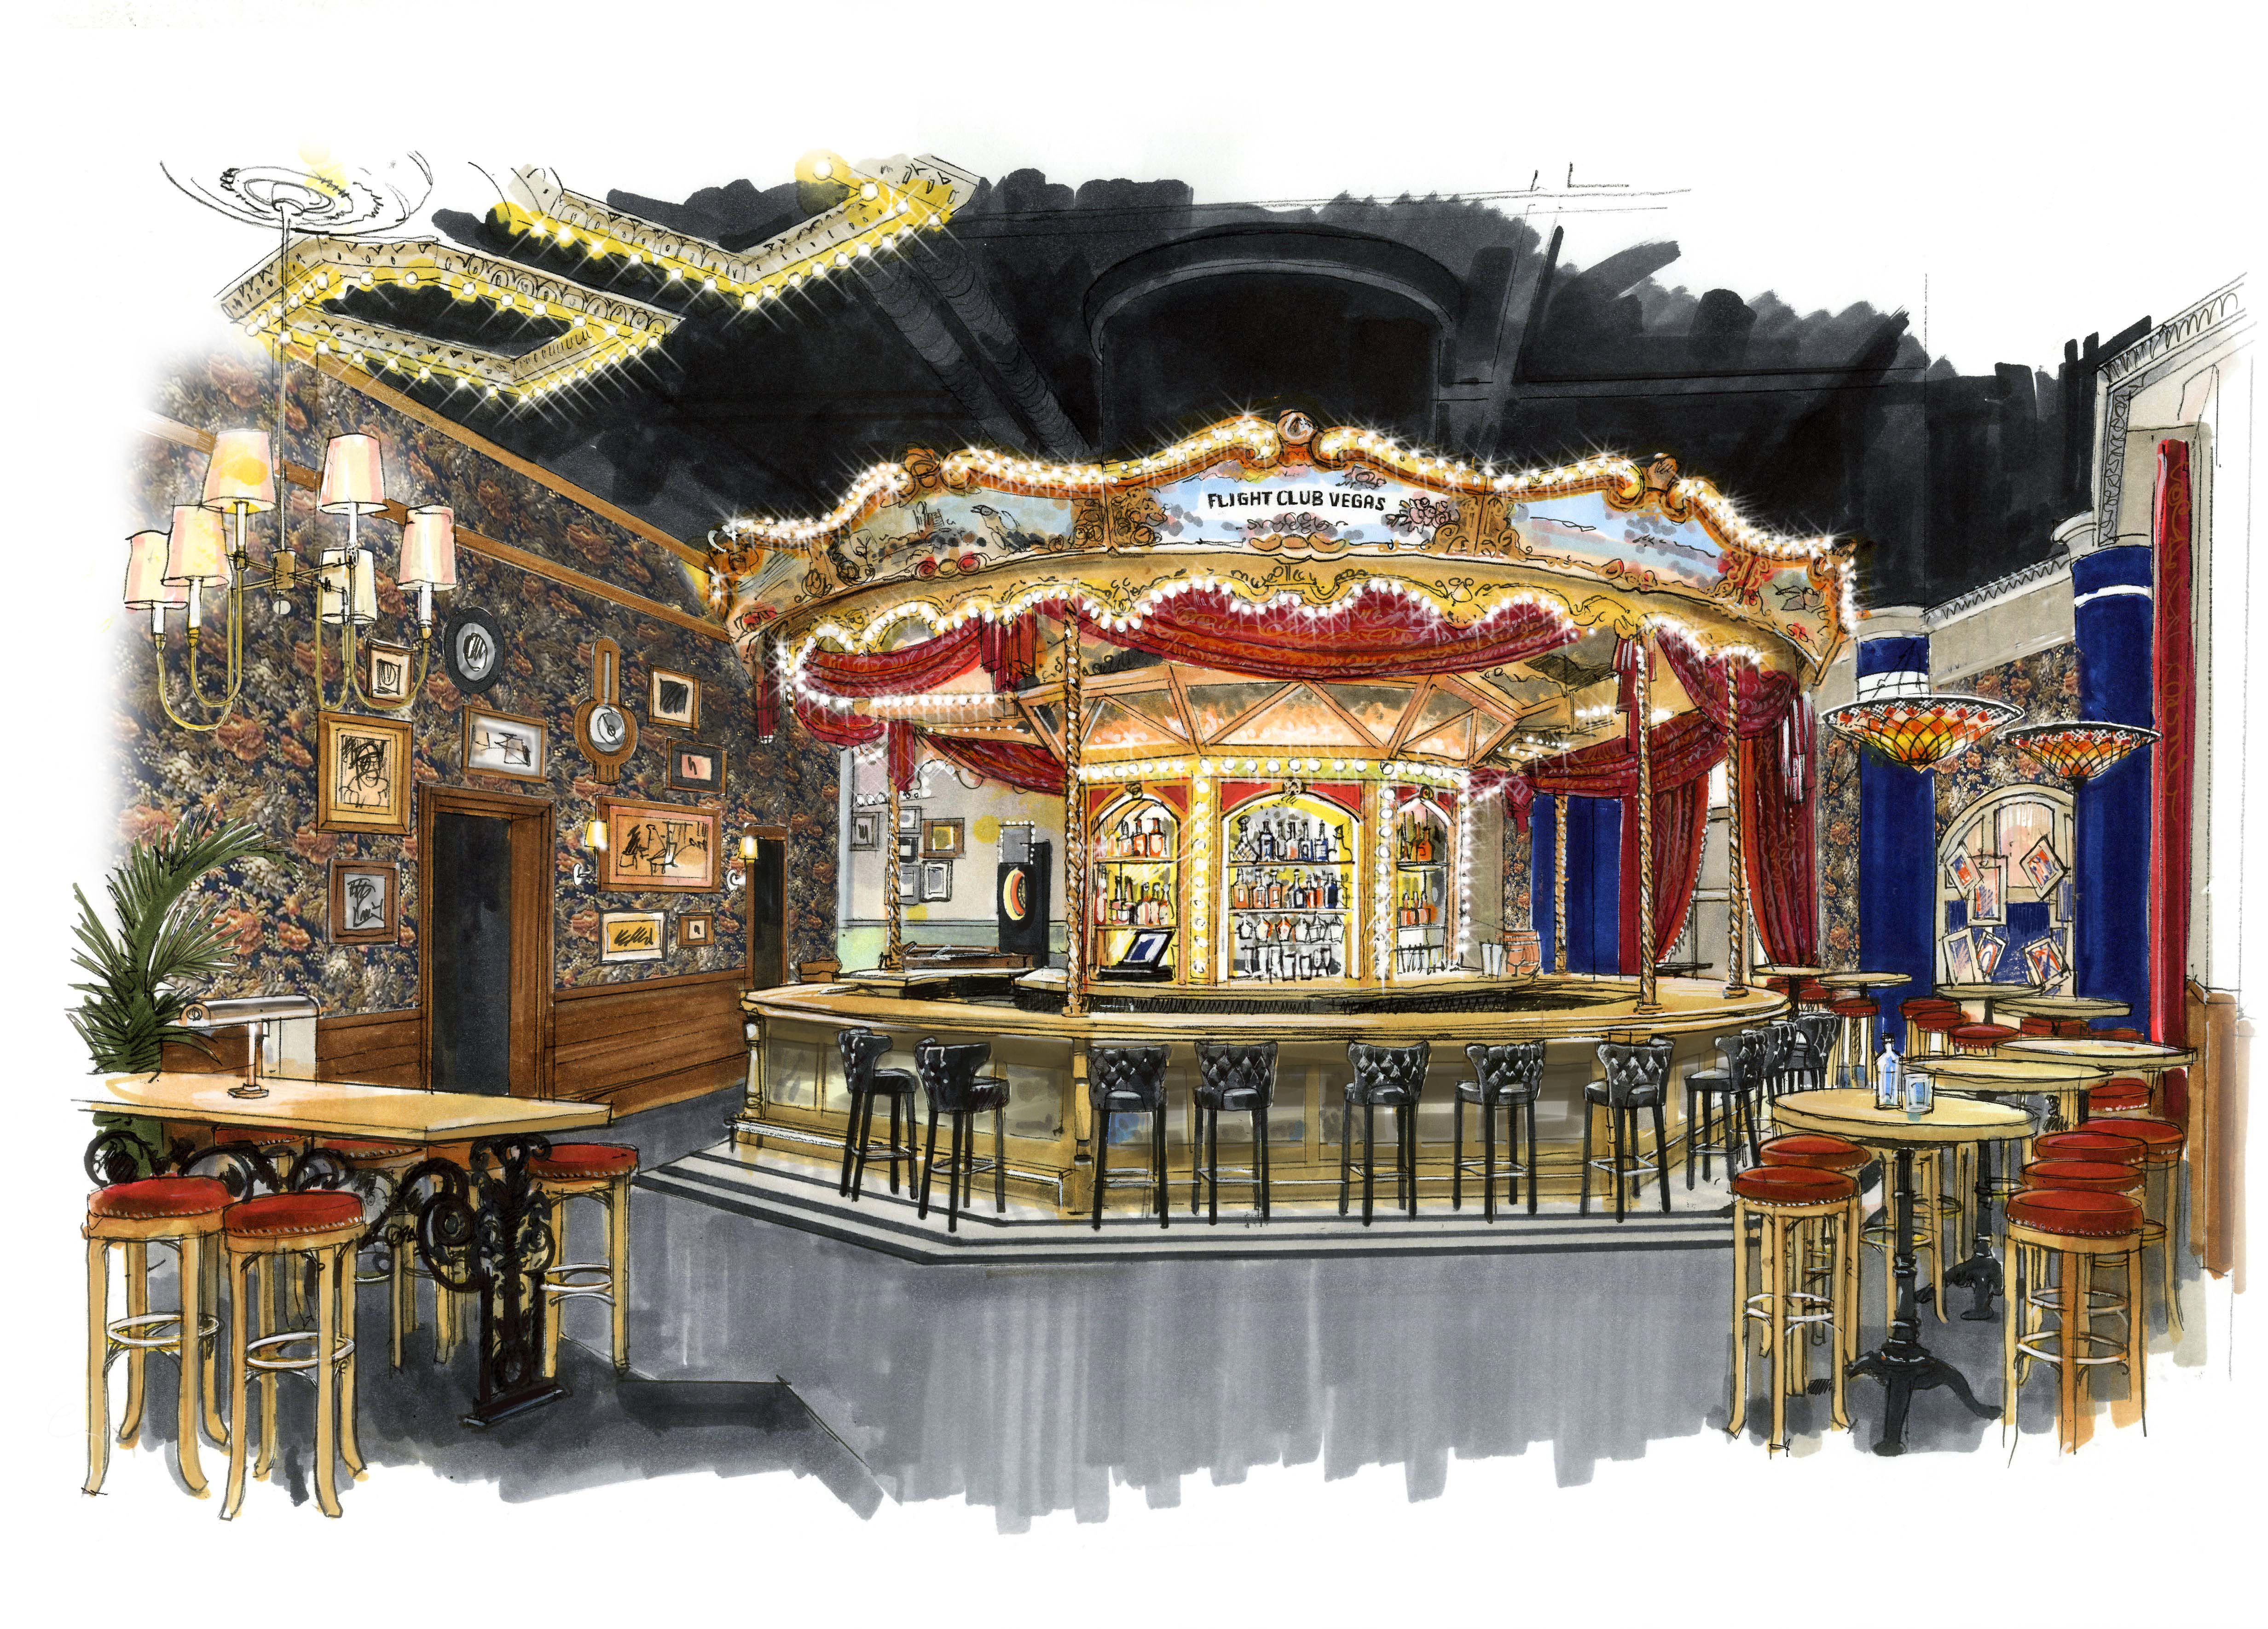 Sketch of the carousel bar at Flight Club Las Vegas